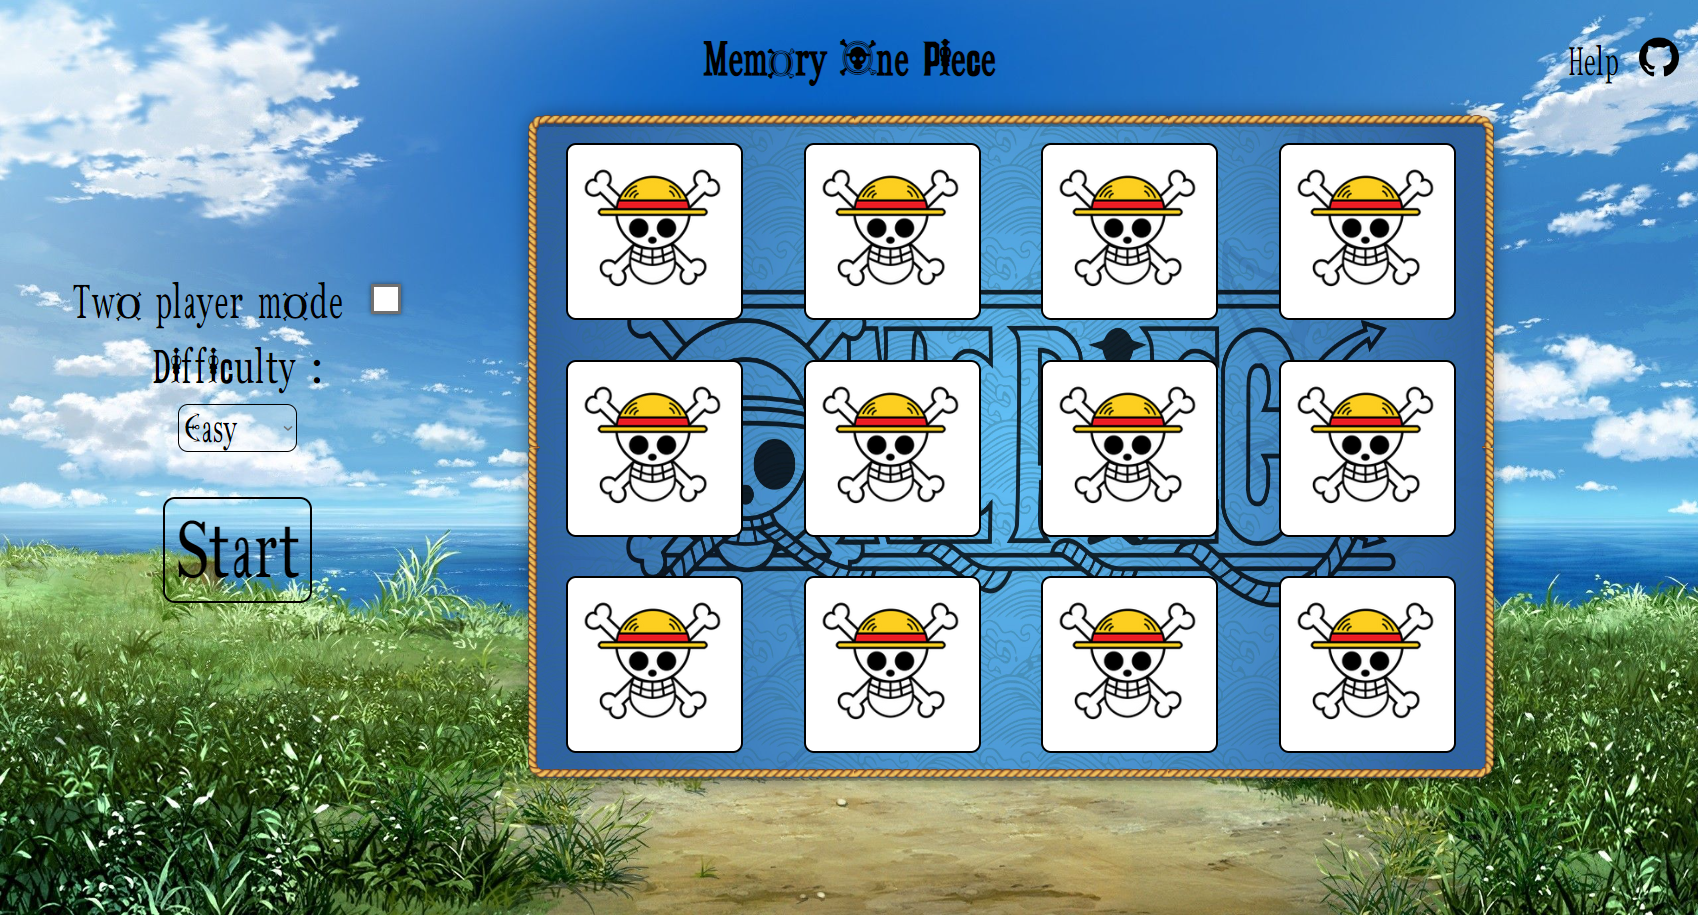 Memory One Piece